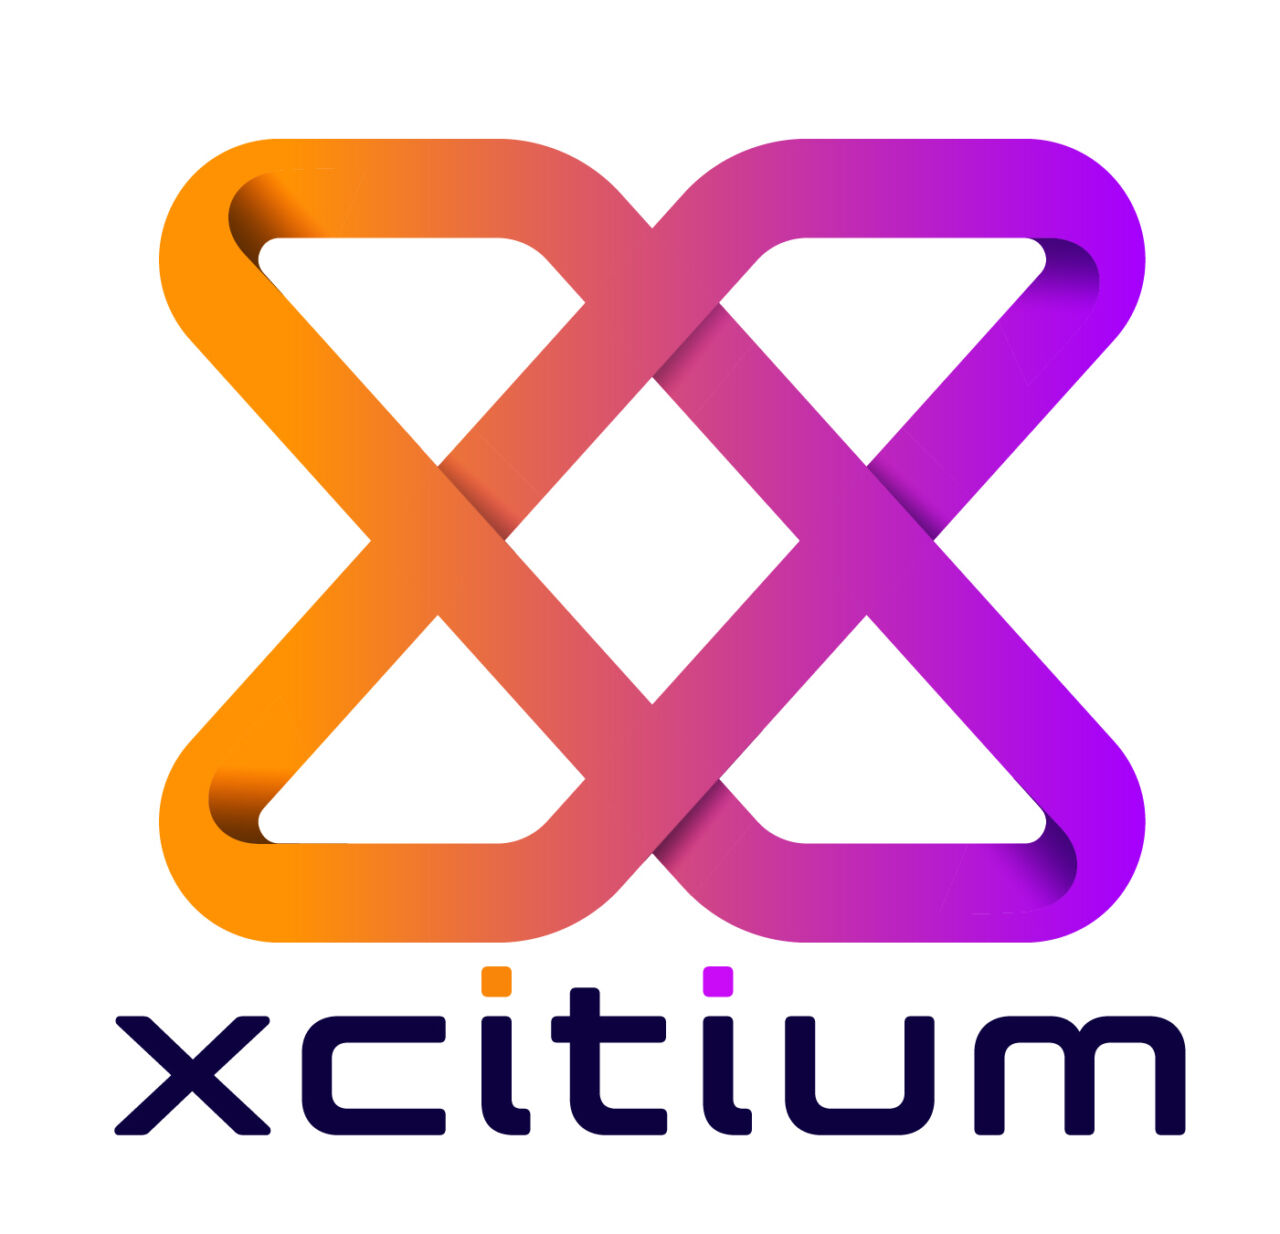 The Xcitium Company Rebrand